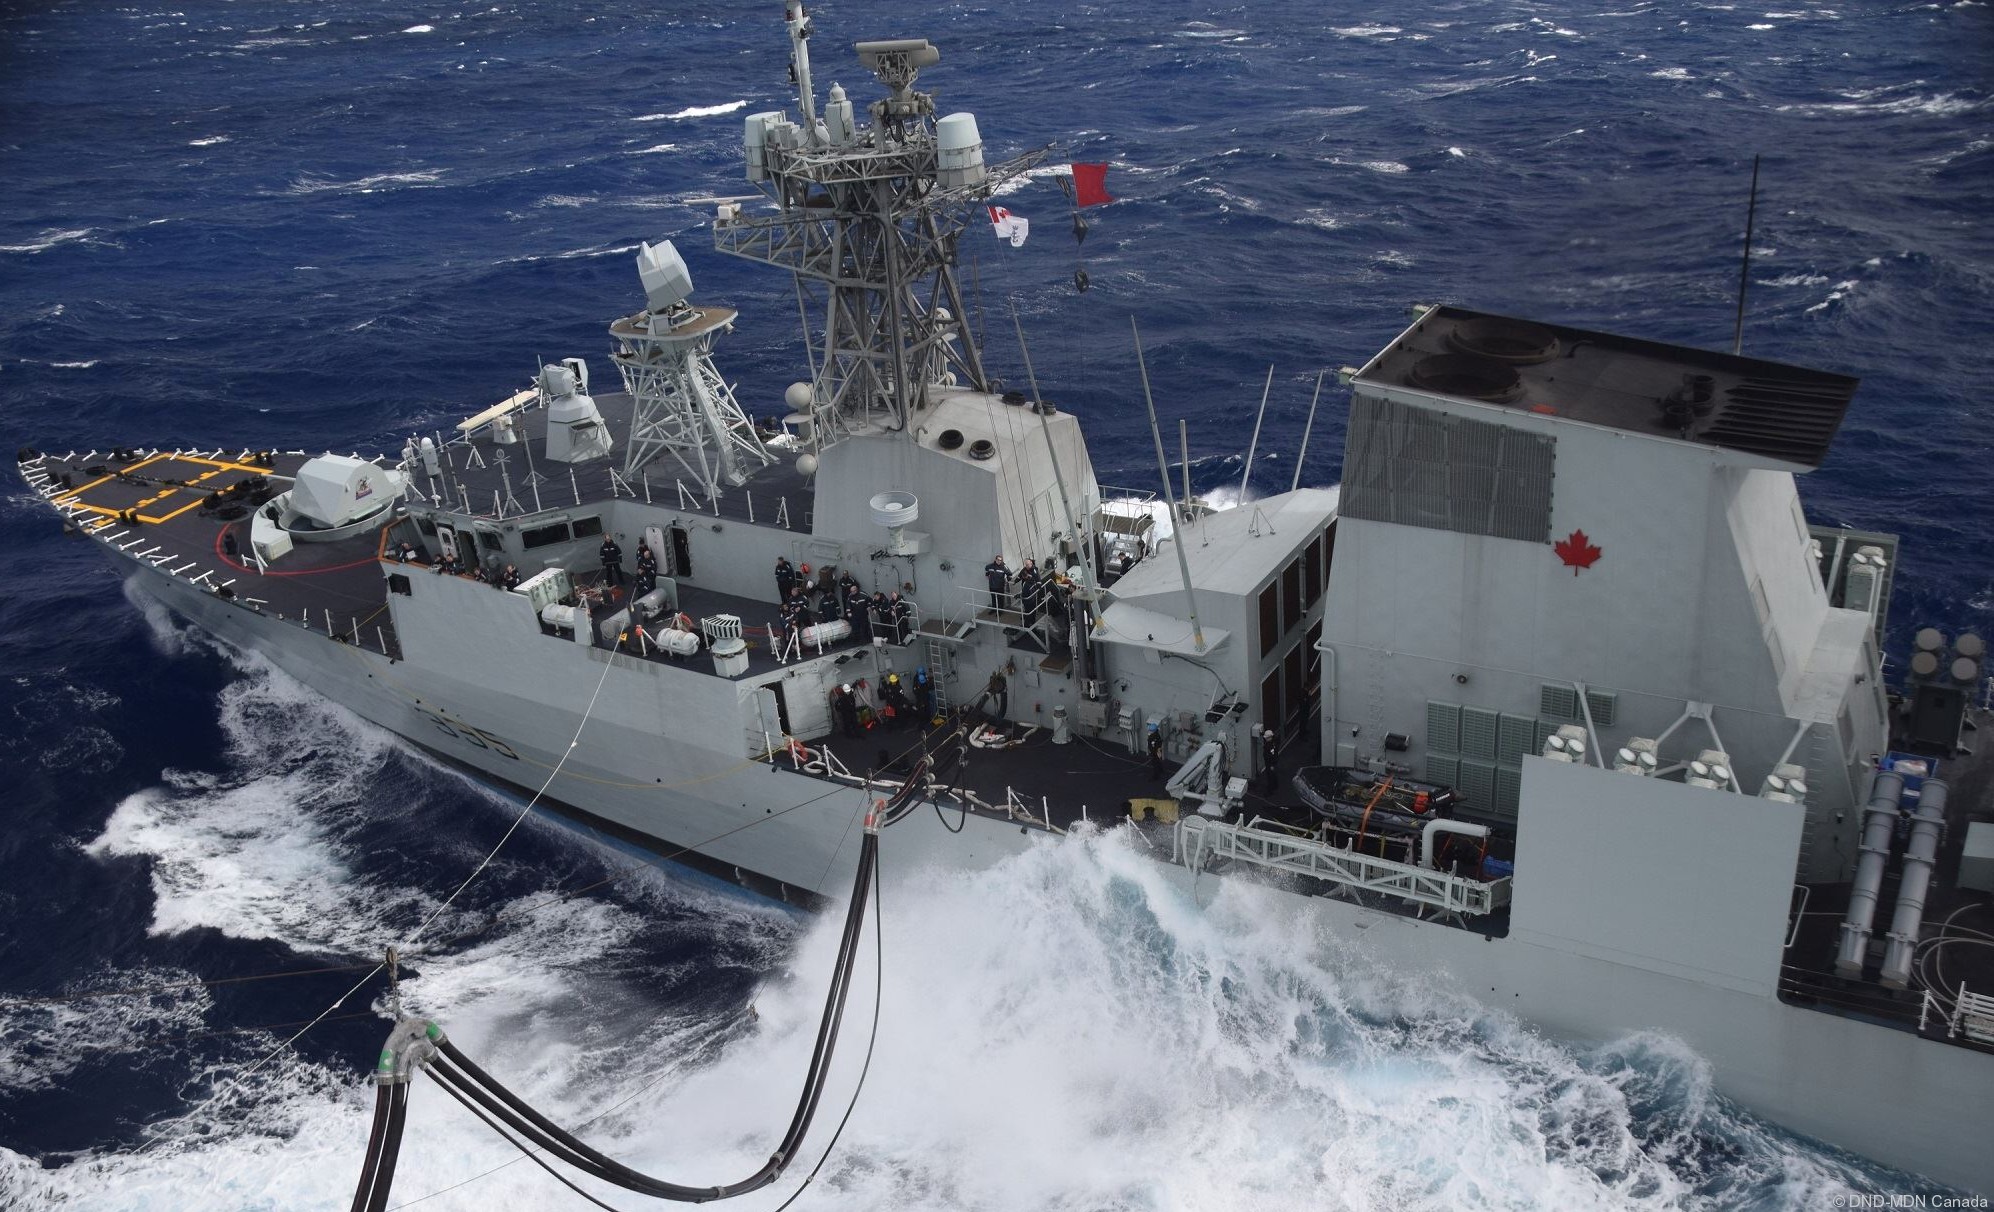 ffh-335 hmcs calgary halifax class helicopter patrol frigate ncsm royal canadian navy 52